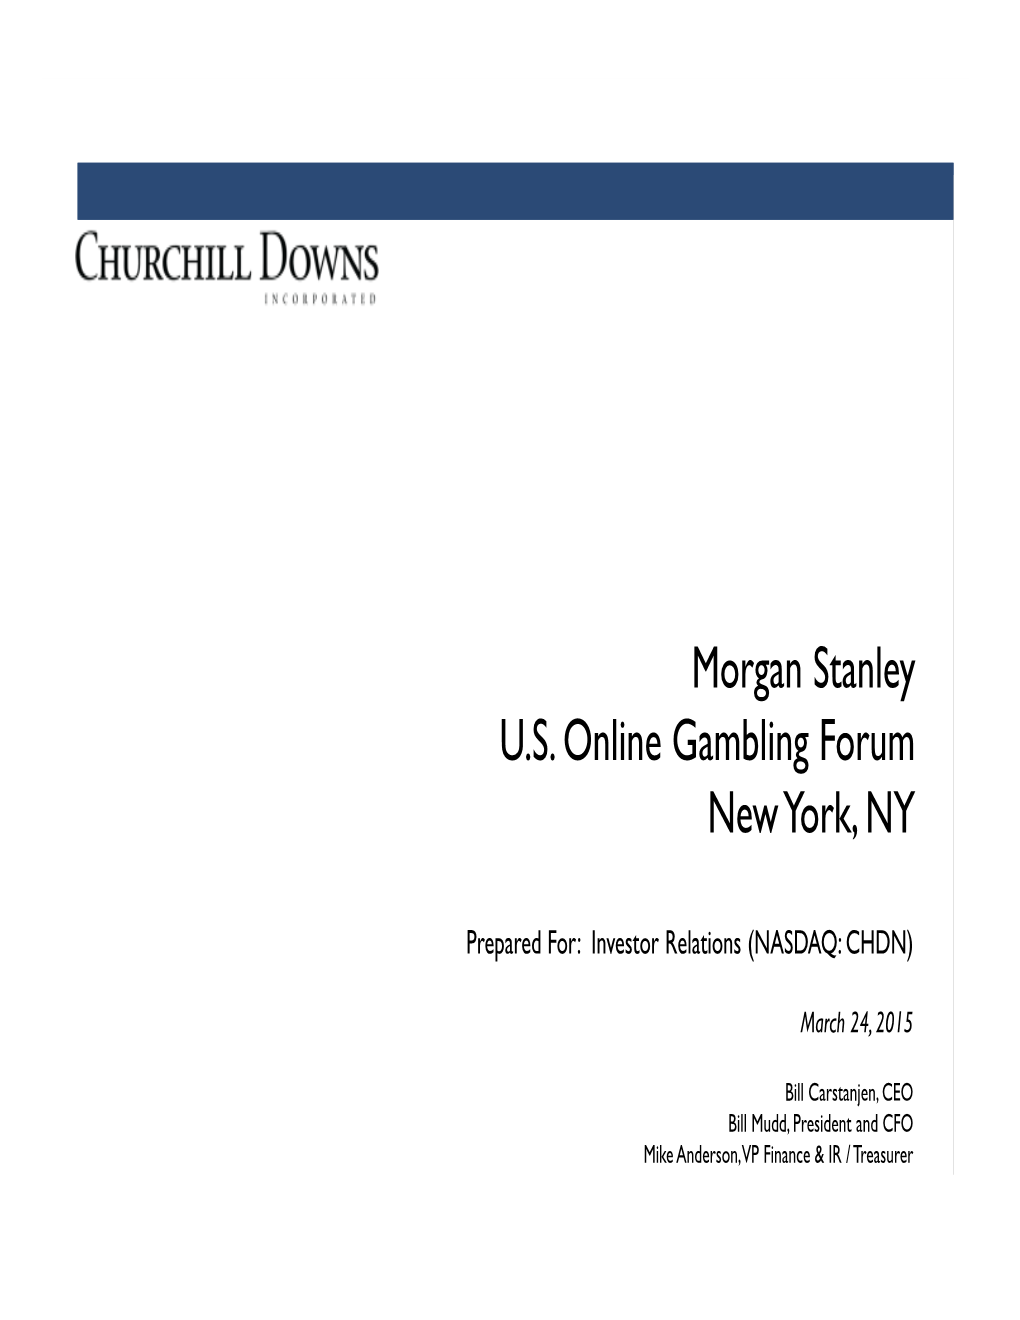 Morgan Stanley U.S. Online Gambling Forum New York, NY